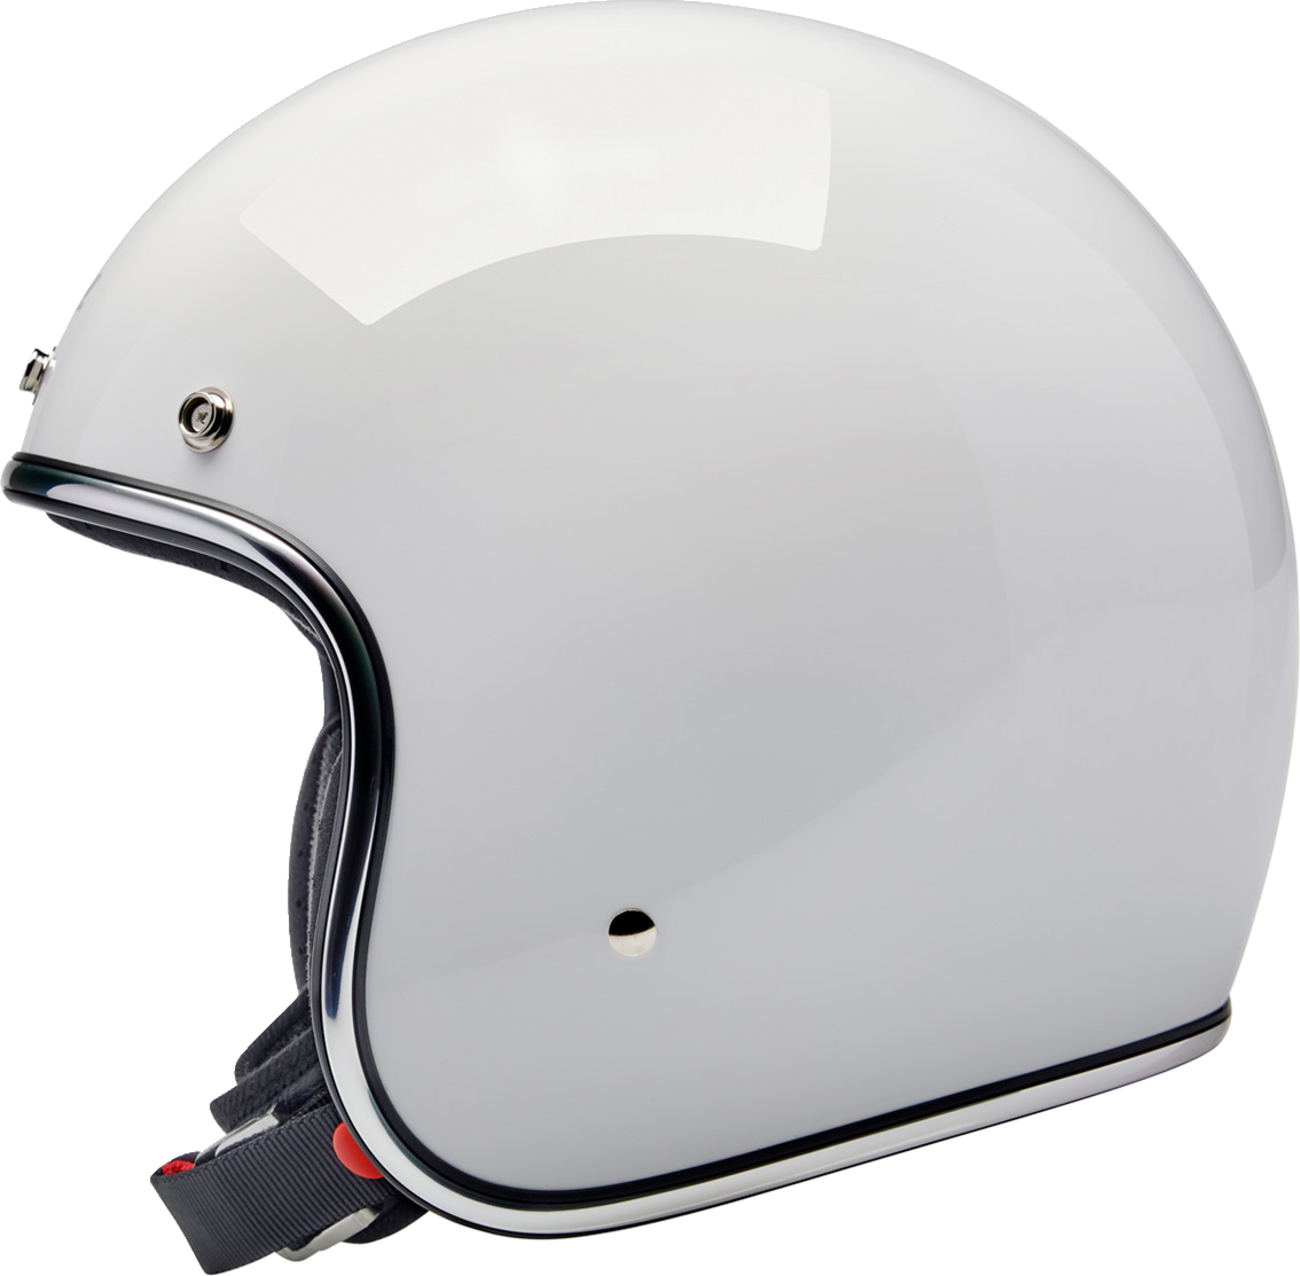 BILTWELL Bonanza Helmet - Gloss White - XS 1001-164-201